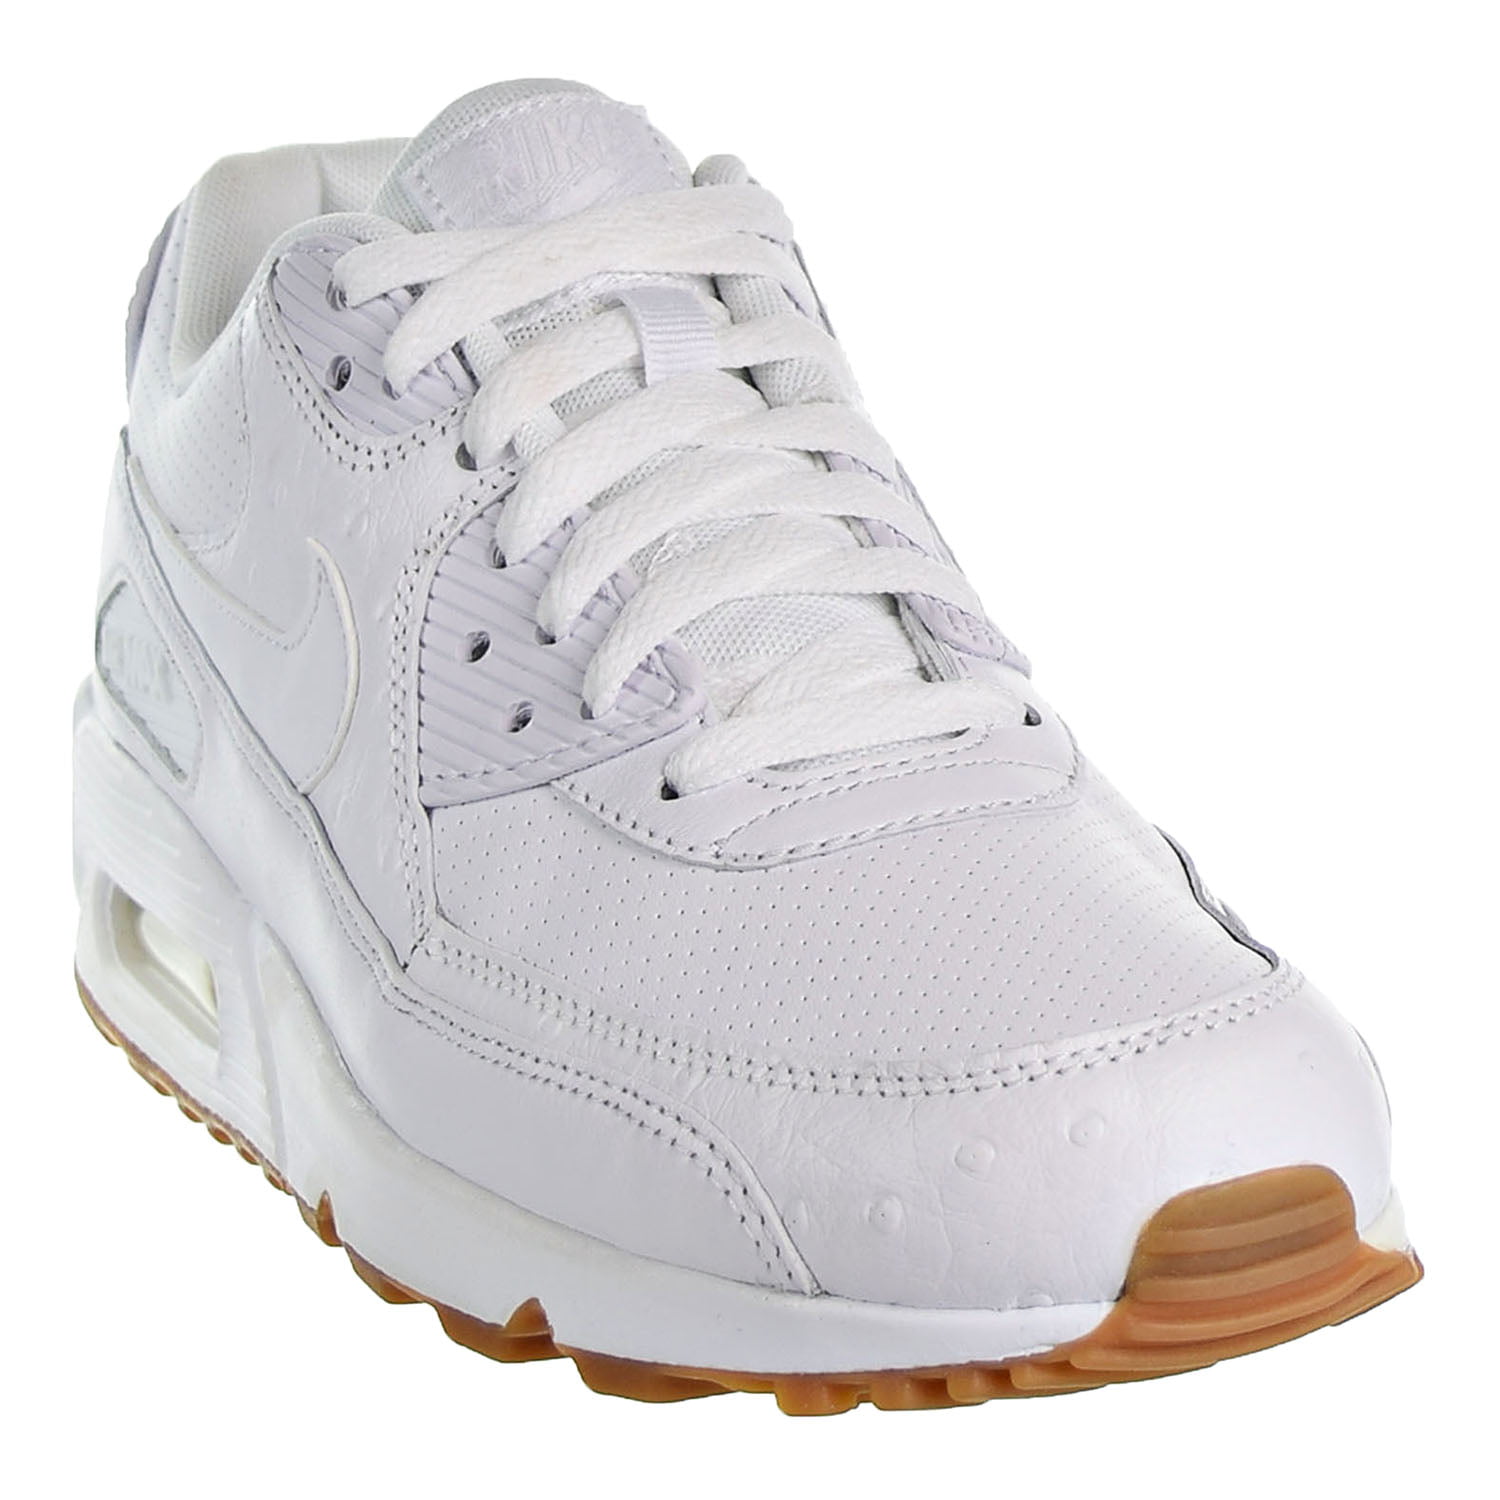 Nike Air Max 90 White Brown Terecotta DM0029-105 New Shoes Sneakers Men's  8-12